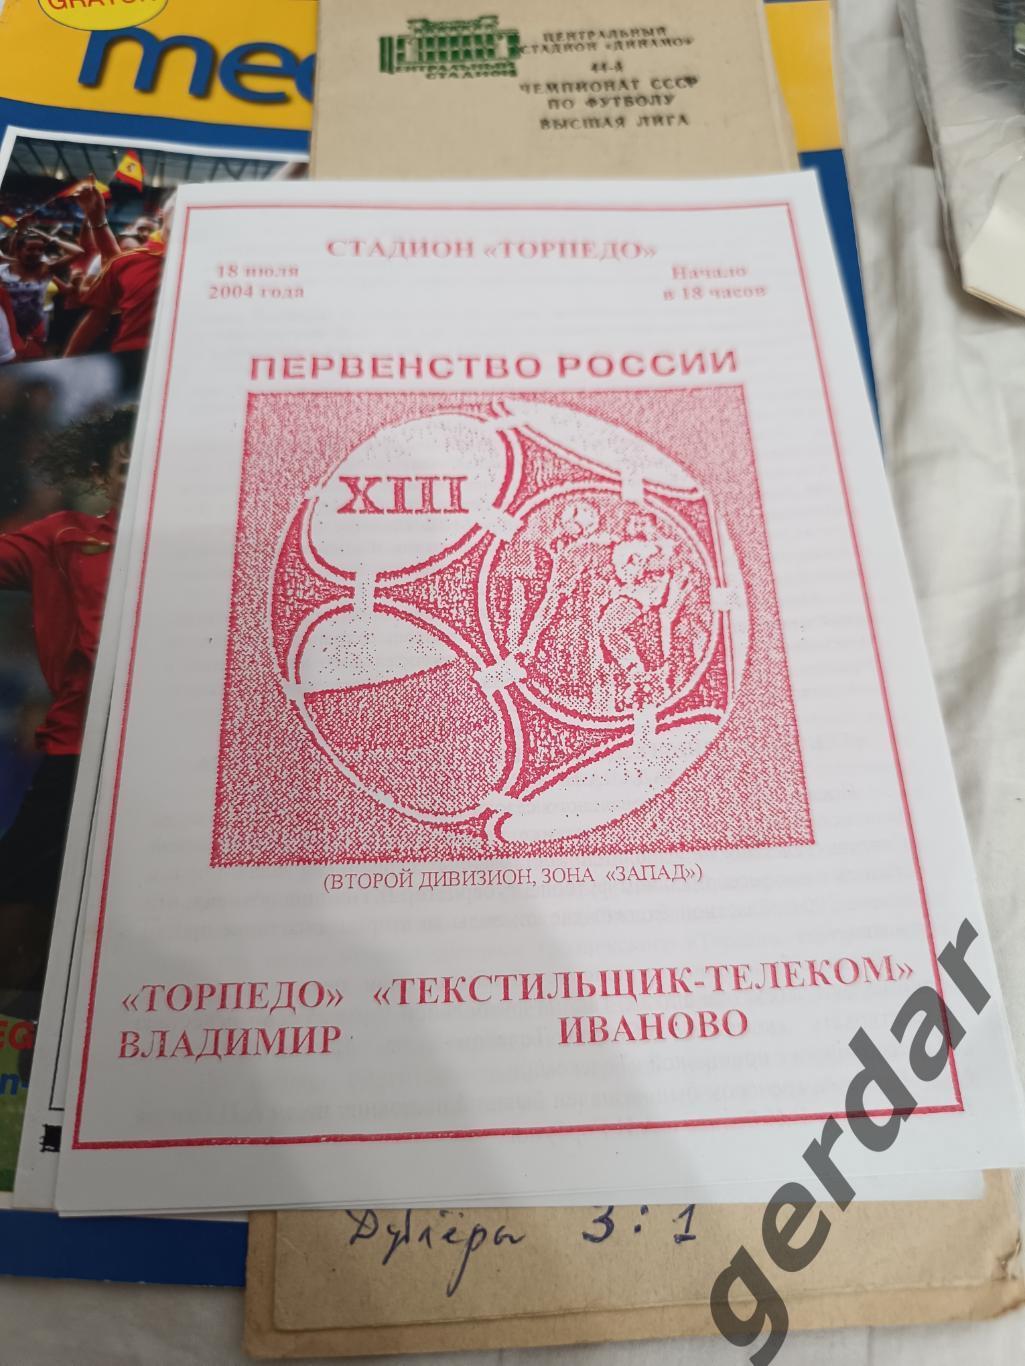 64 торпедо Владимир текстильщик-телеком Иваново 2004